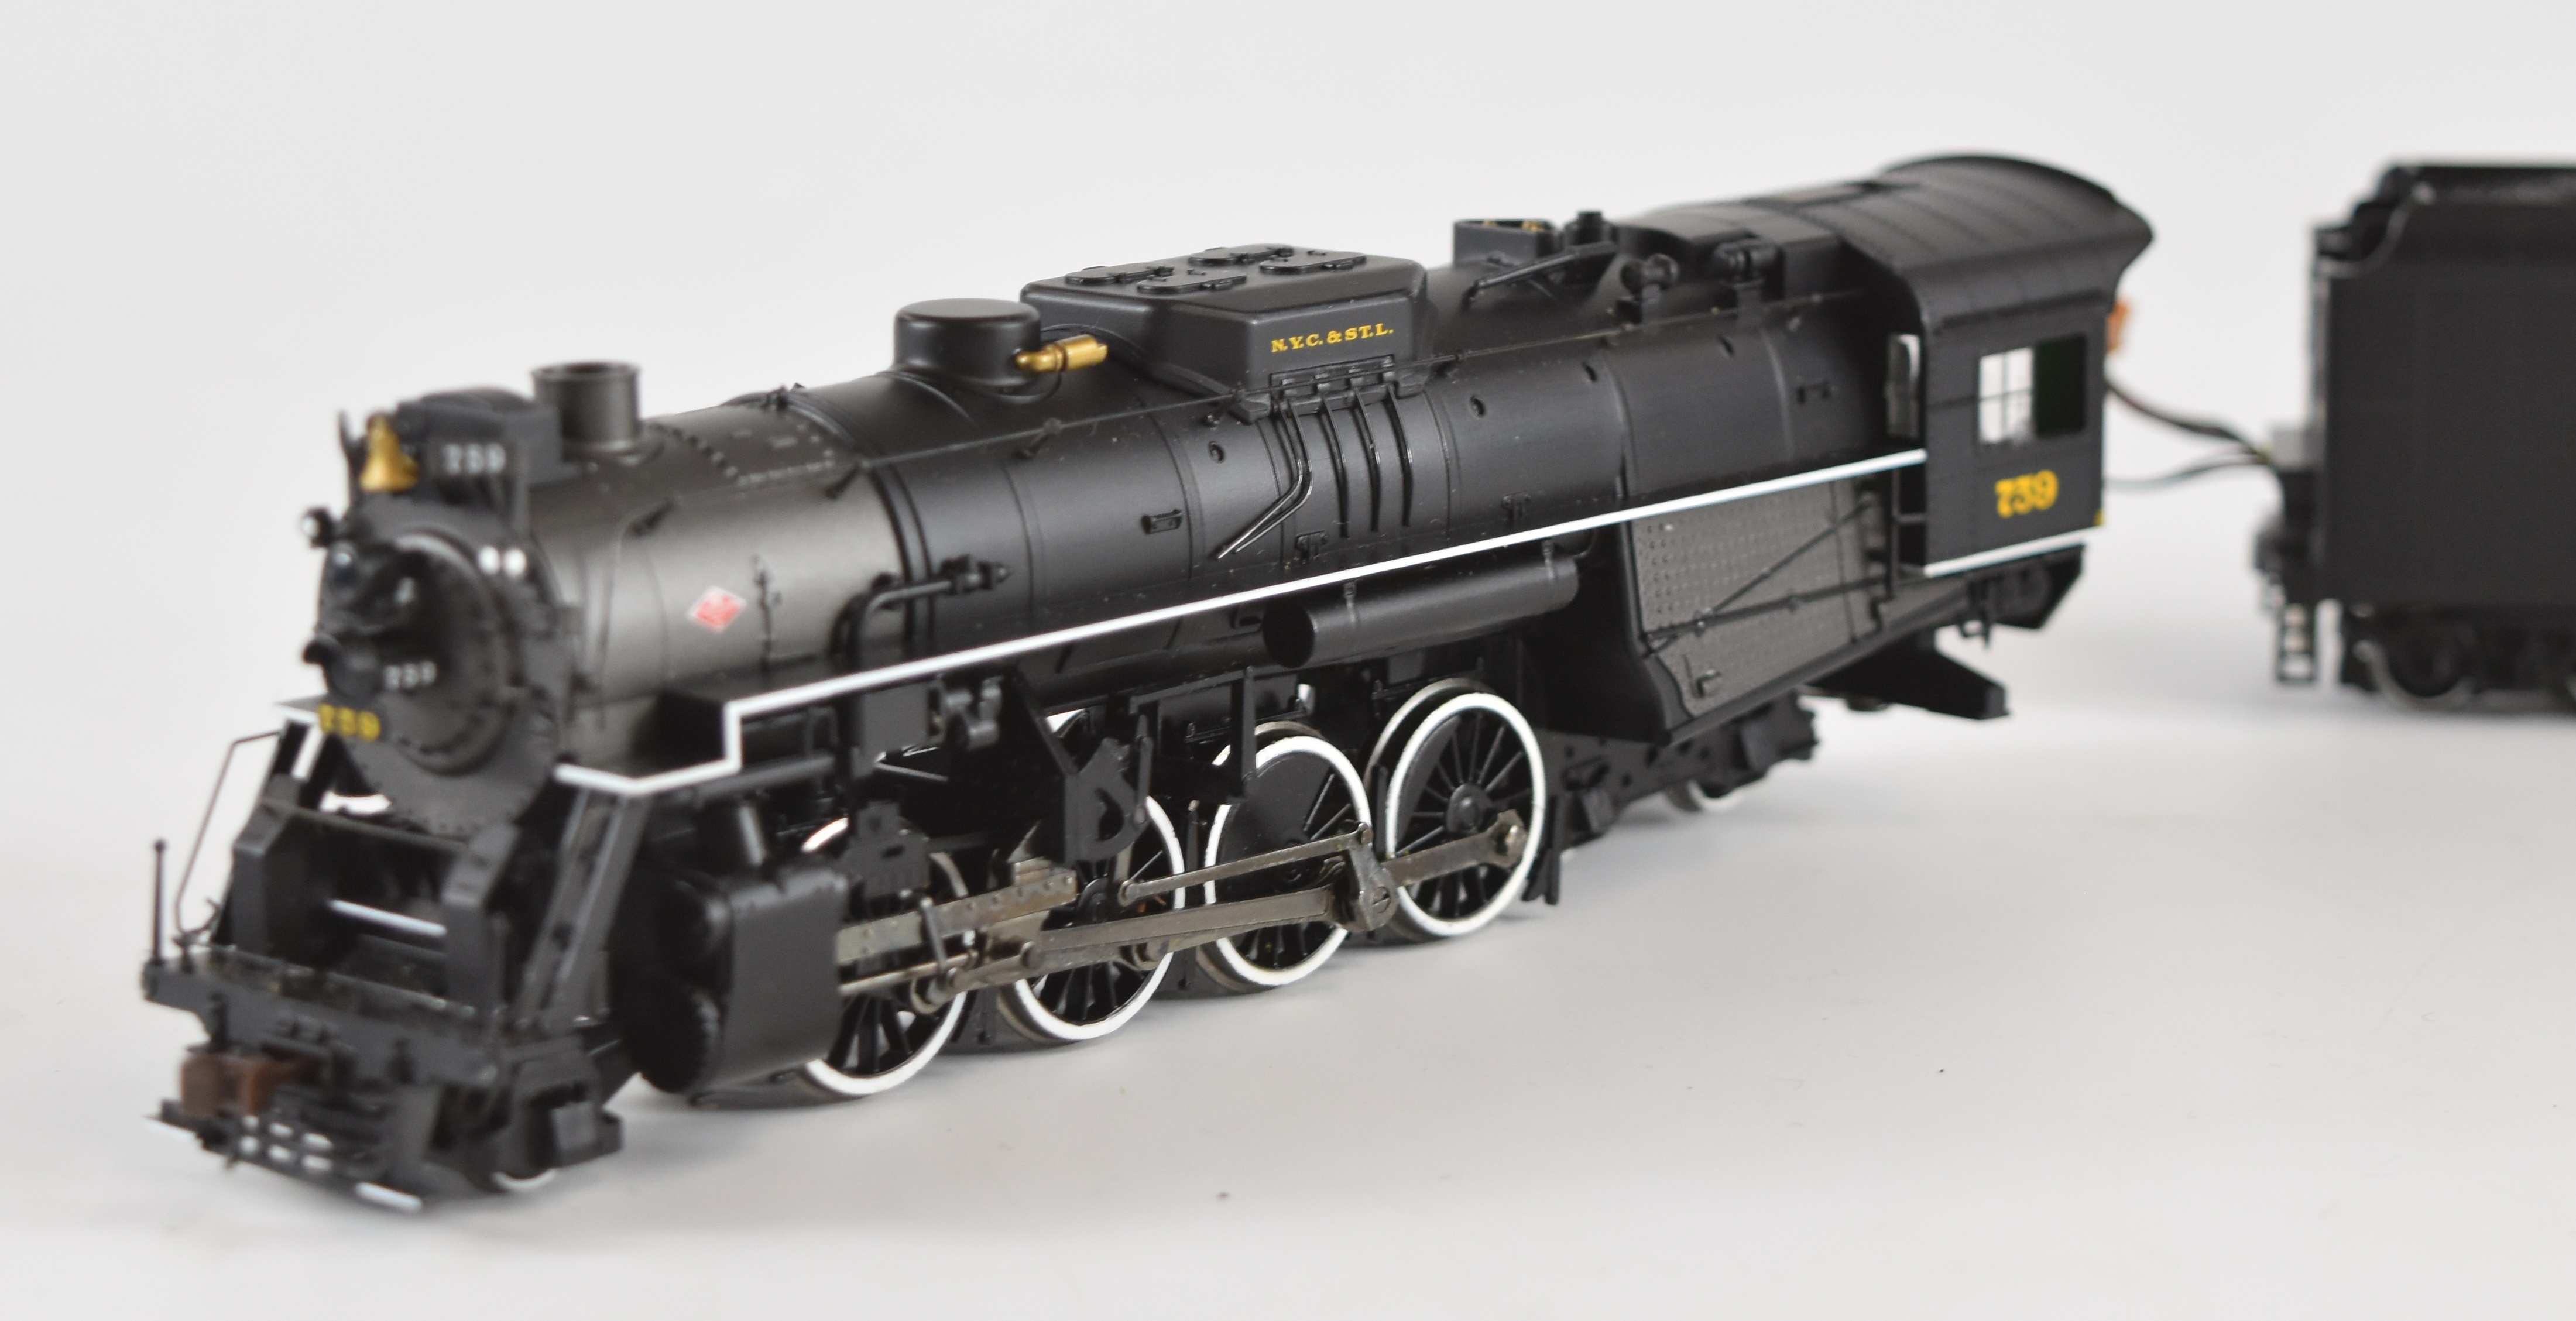 Bachmann 00 gauge HO model railway American Nickel Plate Railroad DCC locomotive, in original box - Image 3 of 4